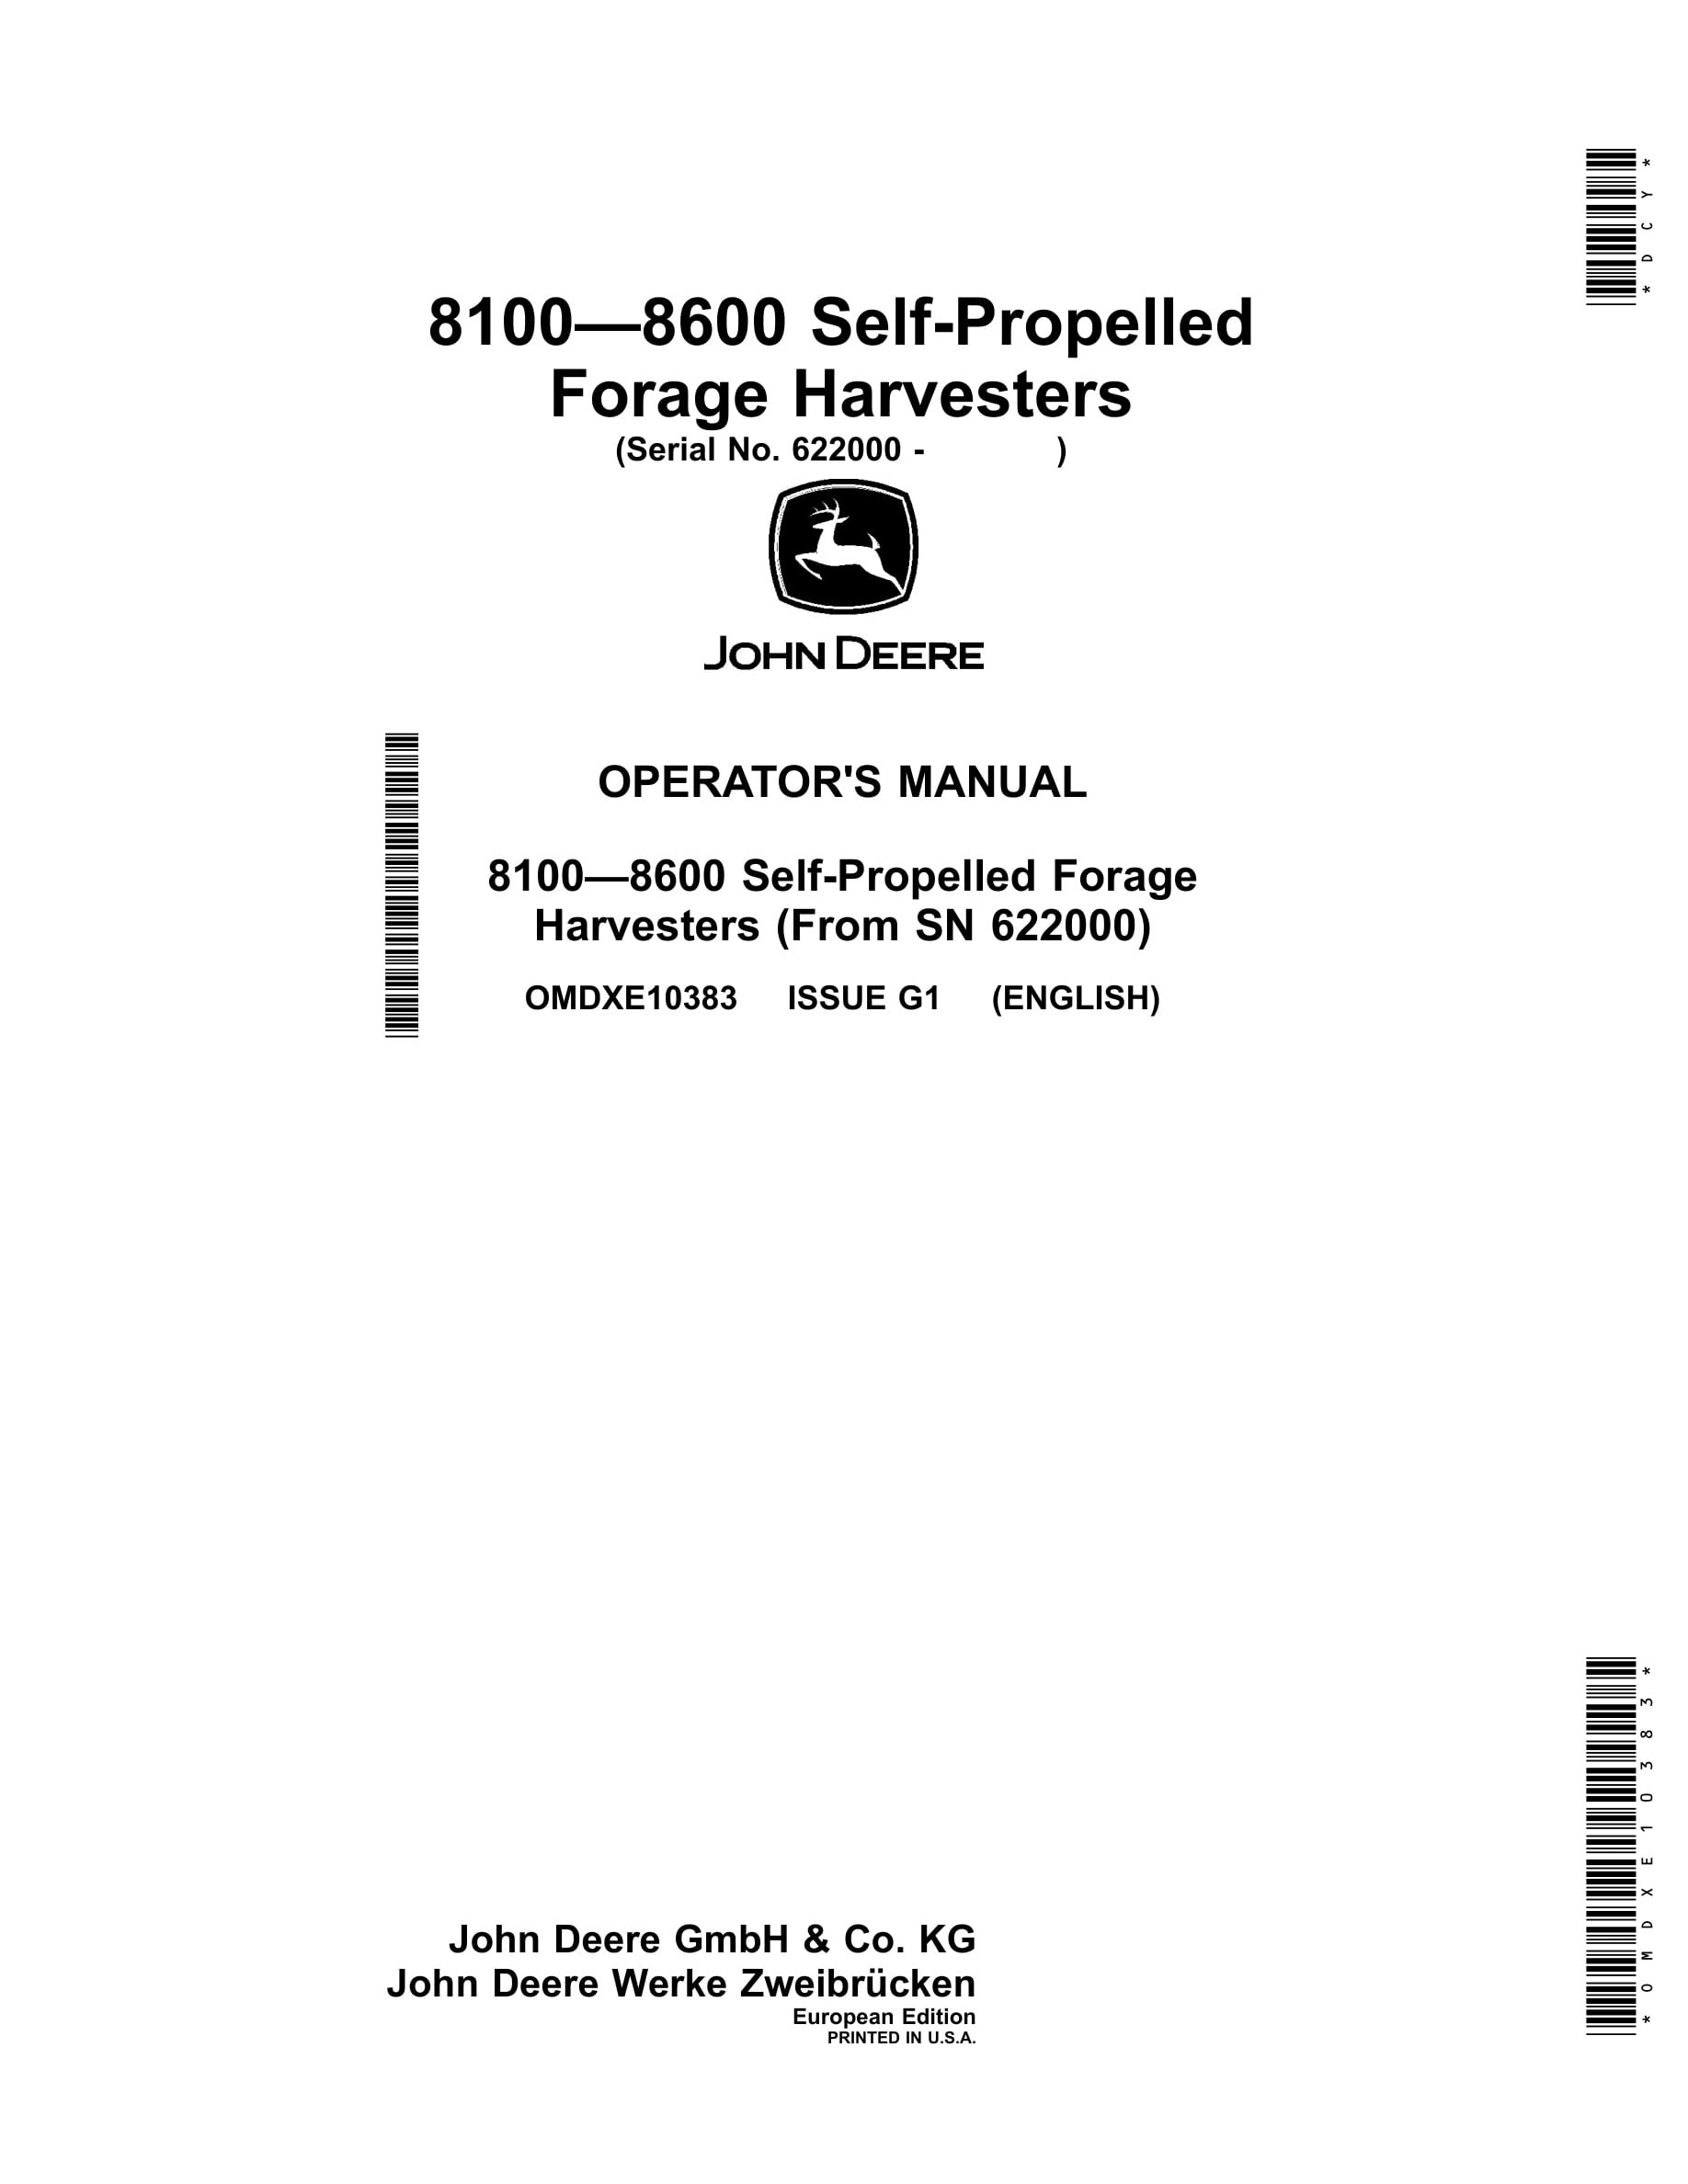 John Deere 8100 – 8600 Self-Propelled Forage Harvester Operator Manual OMDXE10383-1